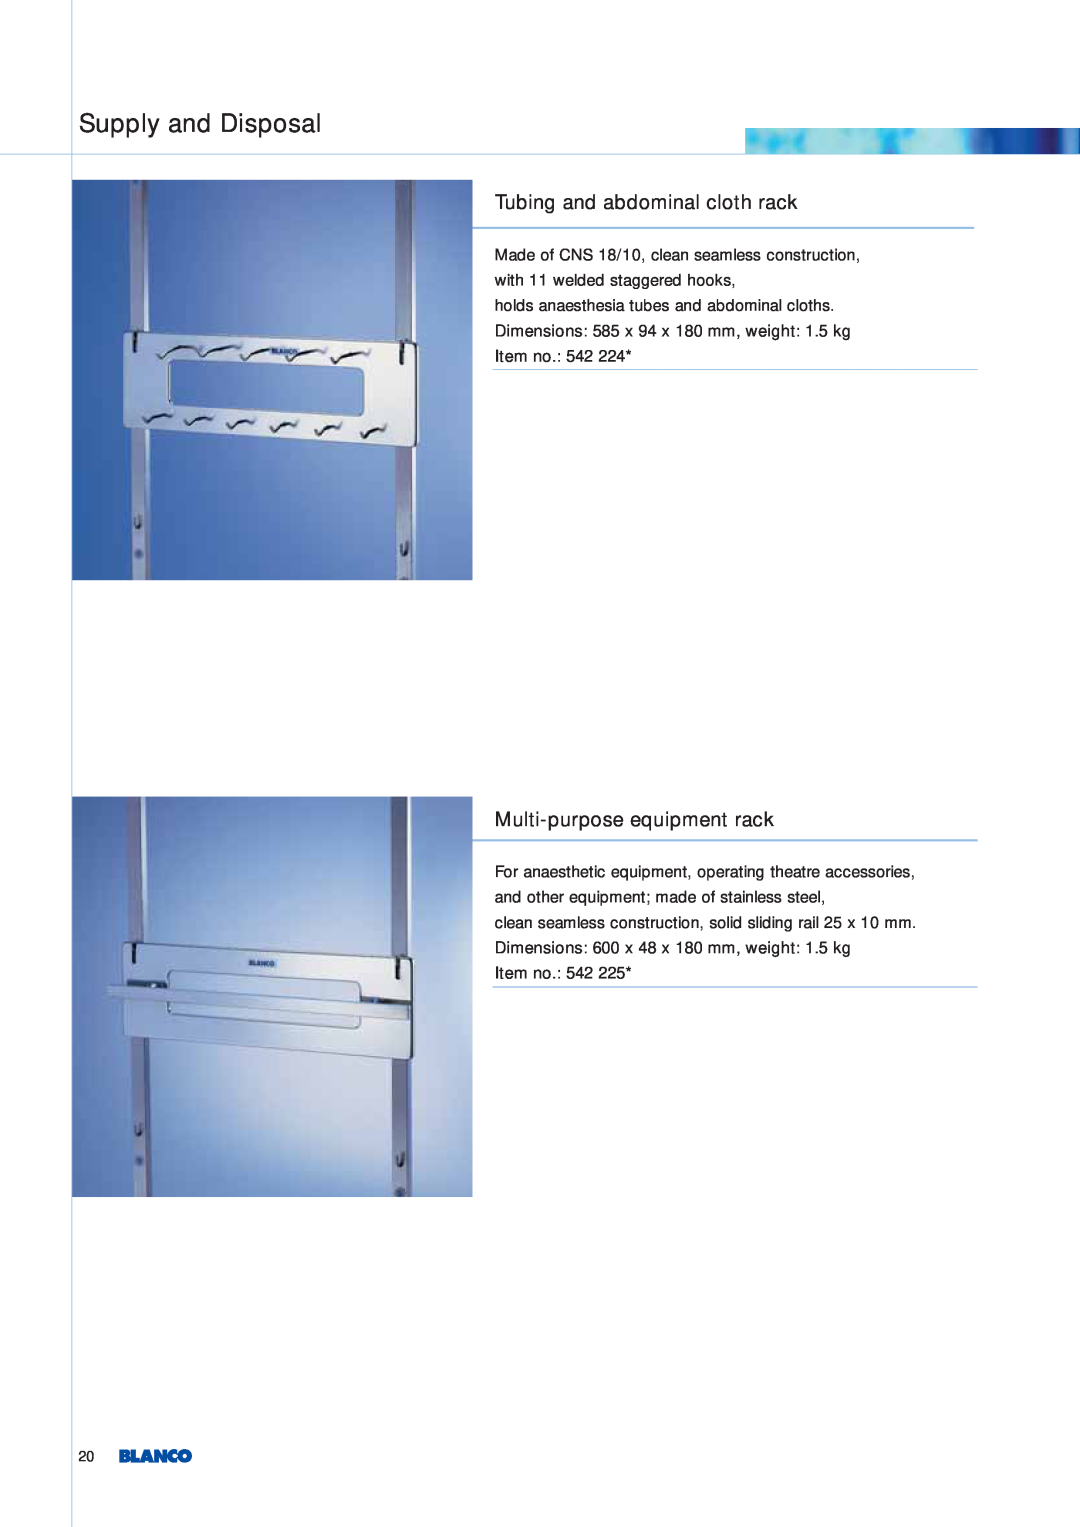 Blanco Tbingen manual Tubing and abdominal cloth rack, Multi-purposeequipment rack, Supply and Disposal 